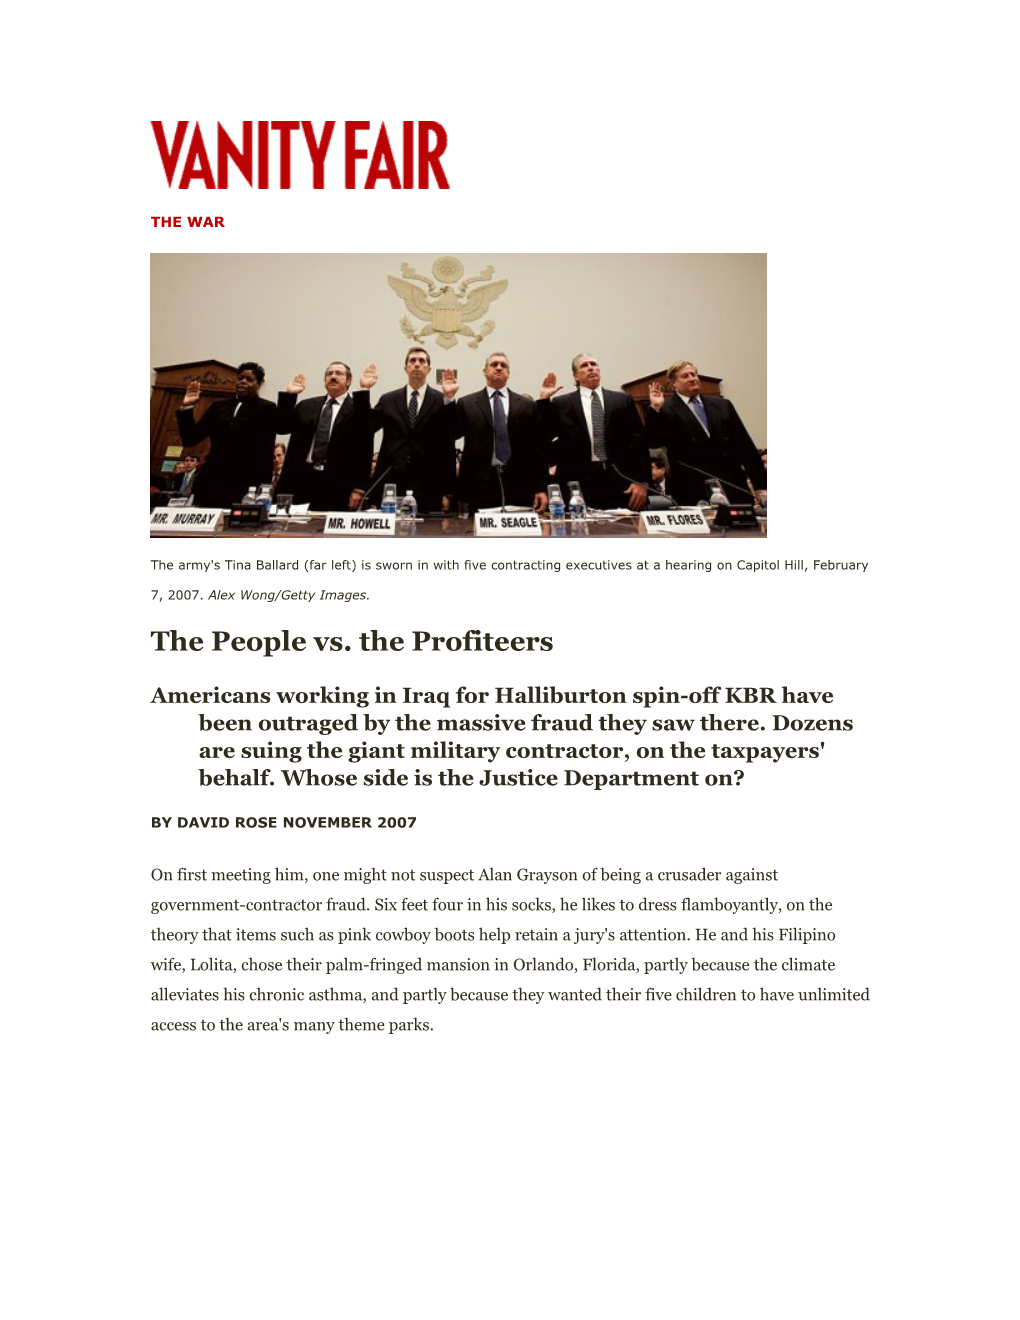 The People V. the Profiteers